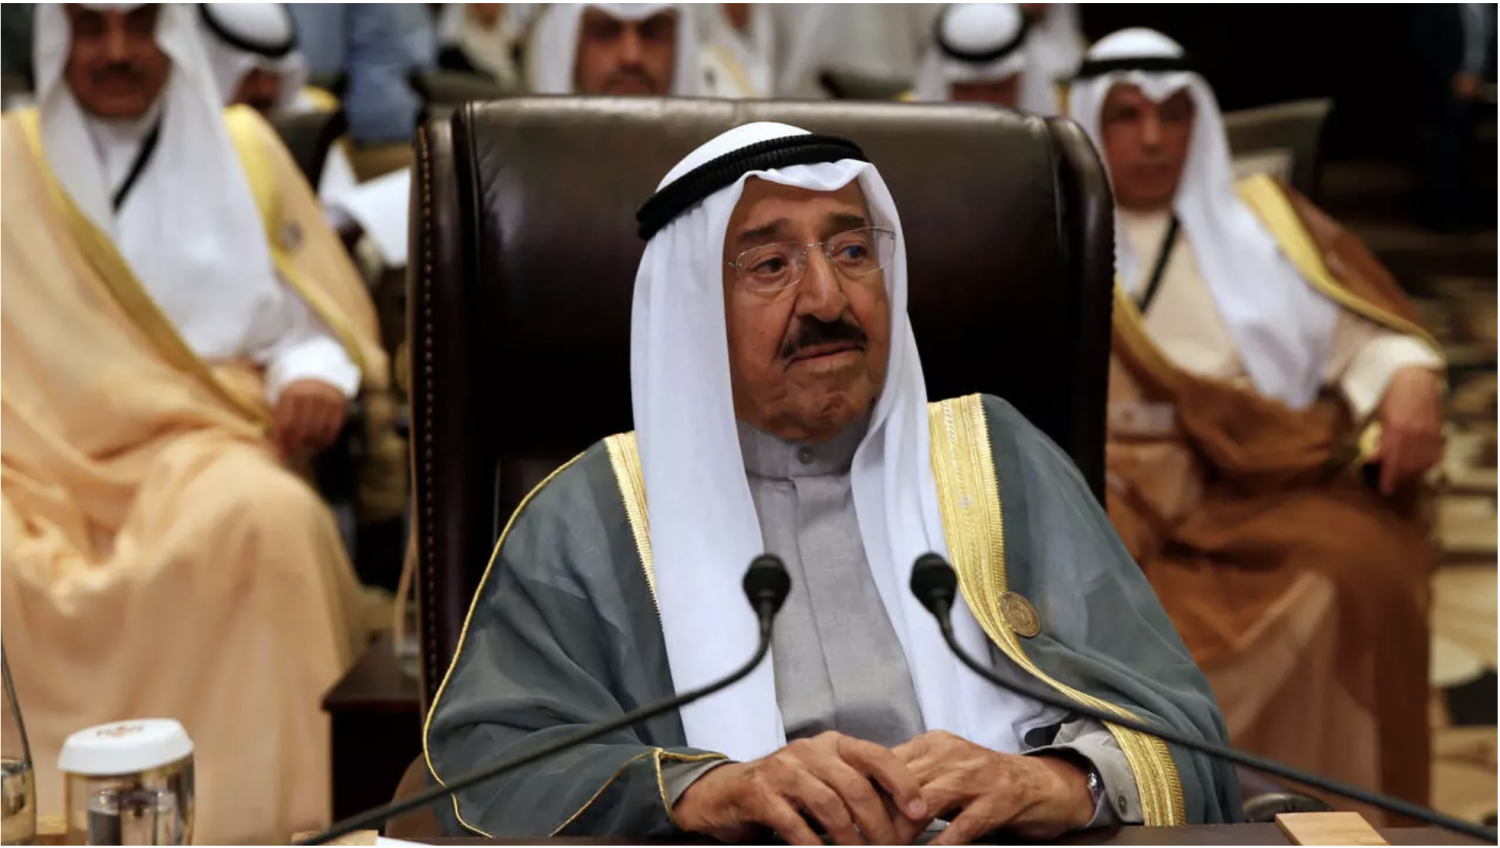 Kuwait’s Emir Sheikh Sabah, who championed Arab unity, dies at age 91